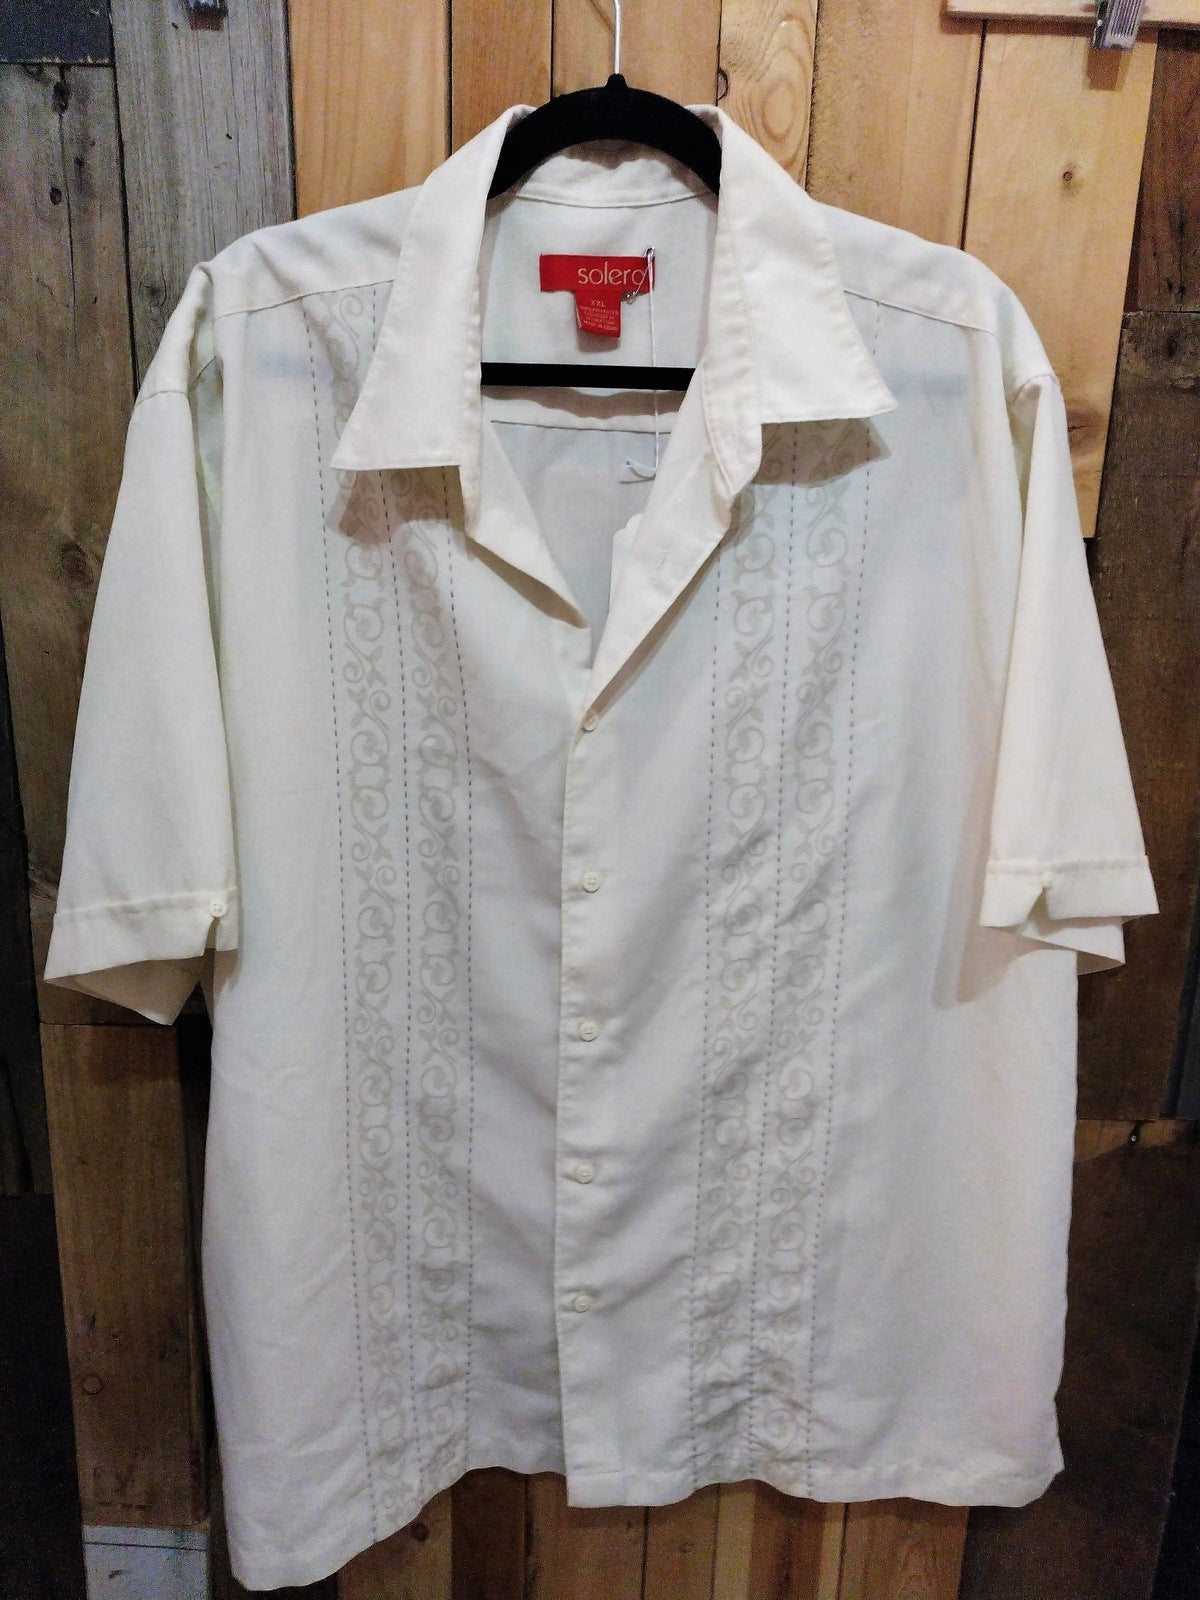 Solero Men's Short Sleeve Vintage Style Shirt Size XXL